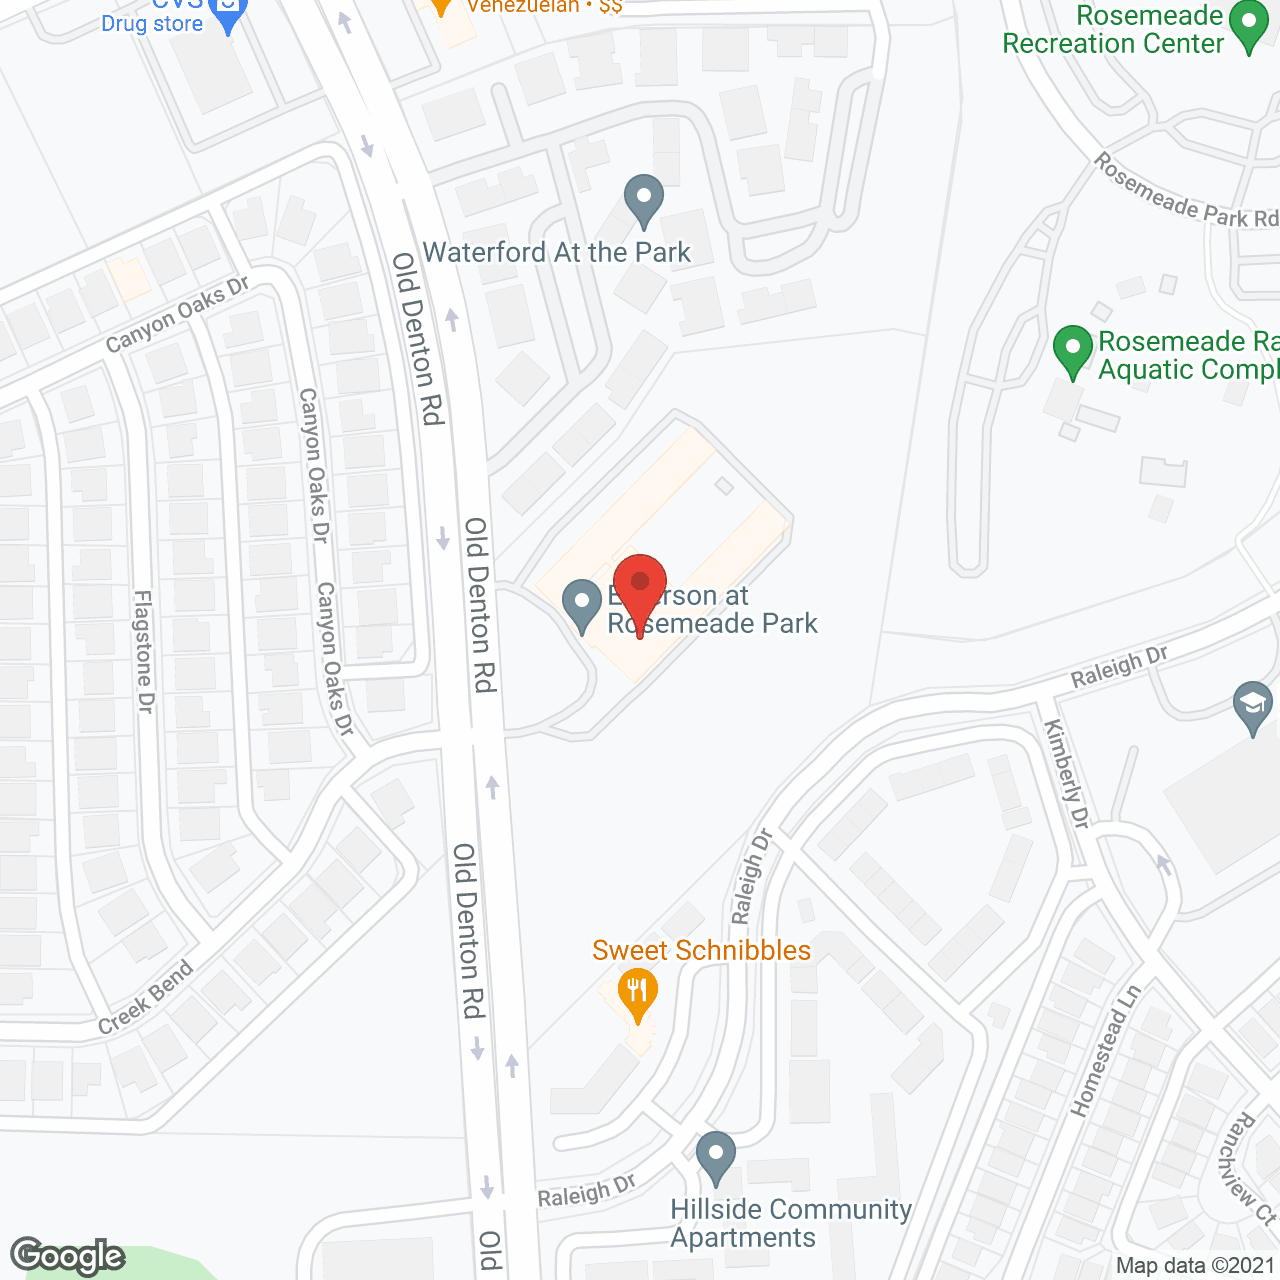 Emerson at Rosemeade Park in google map